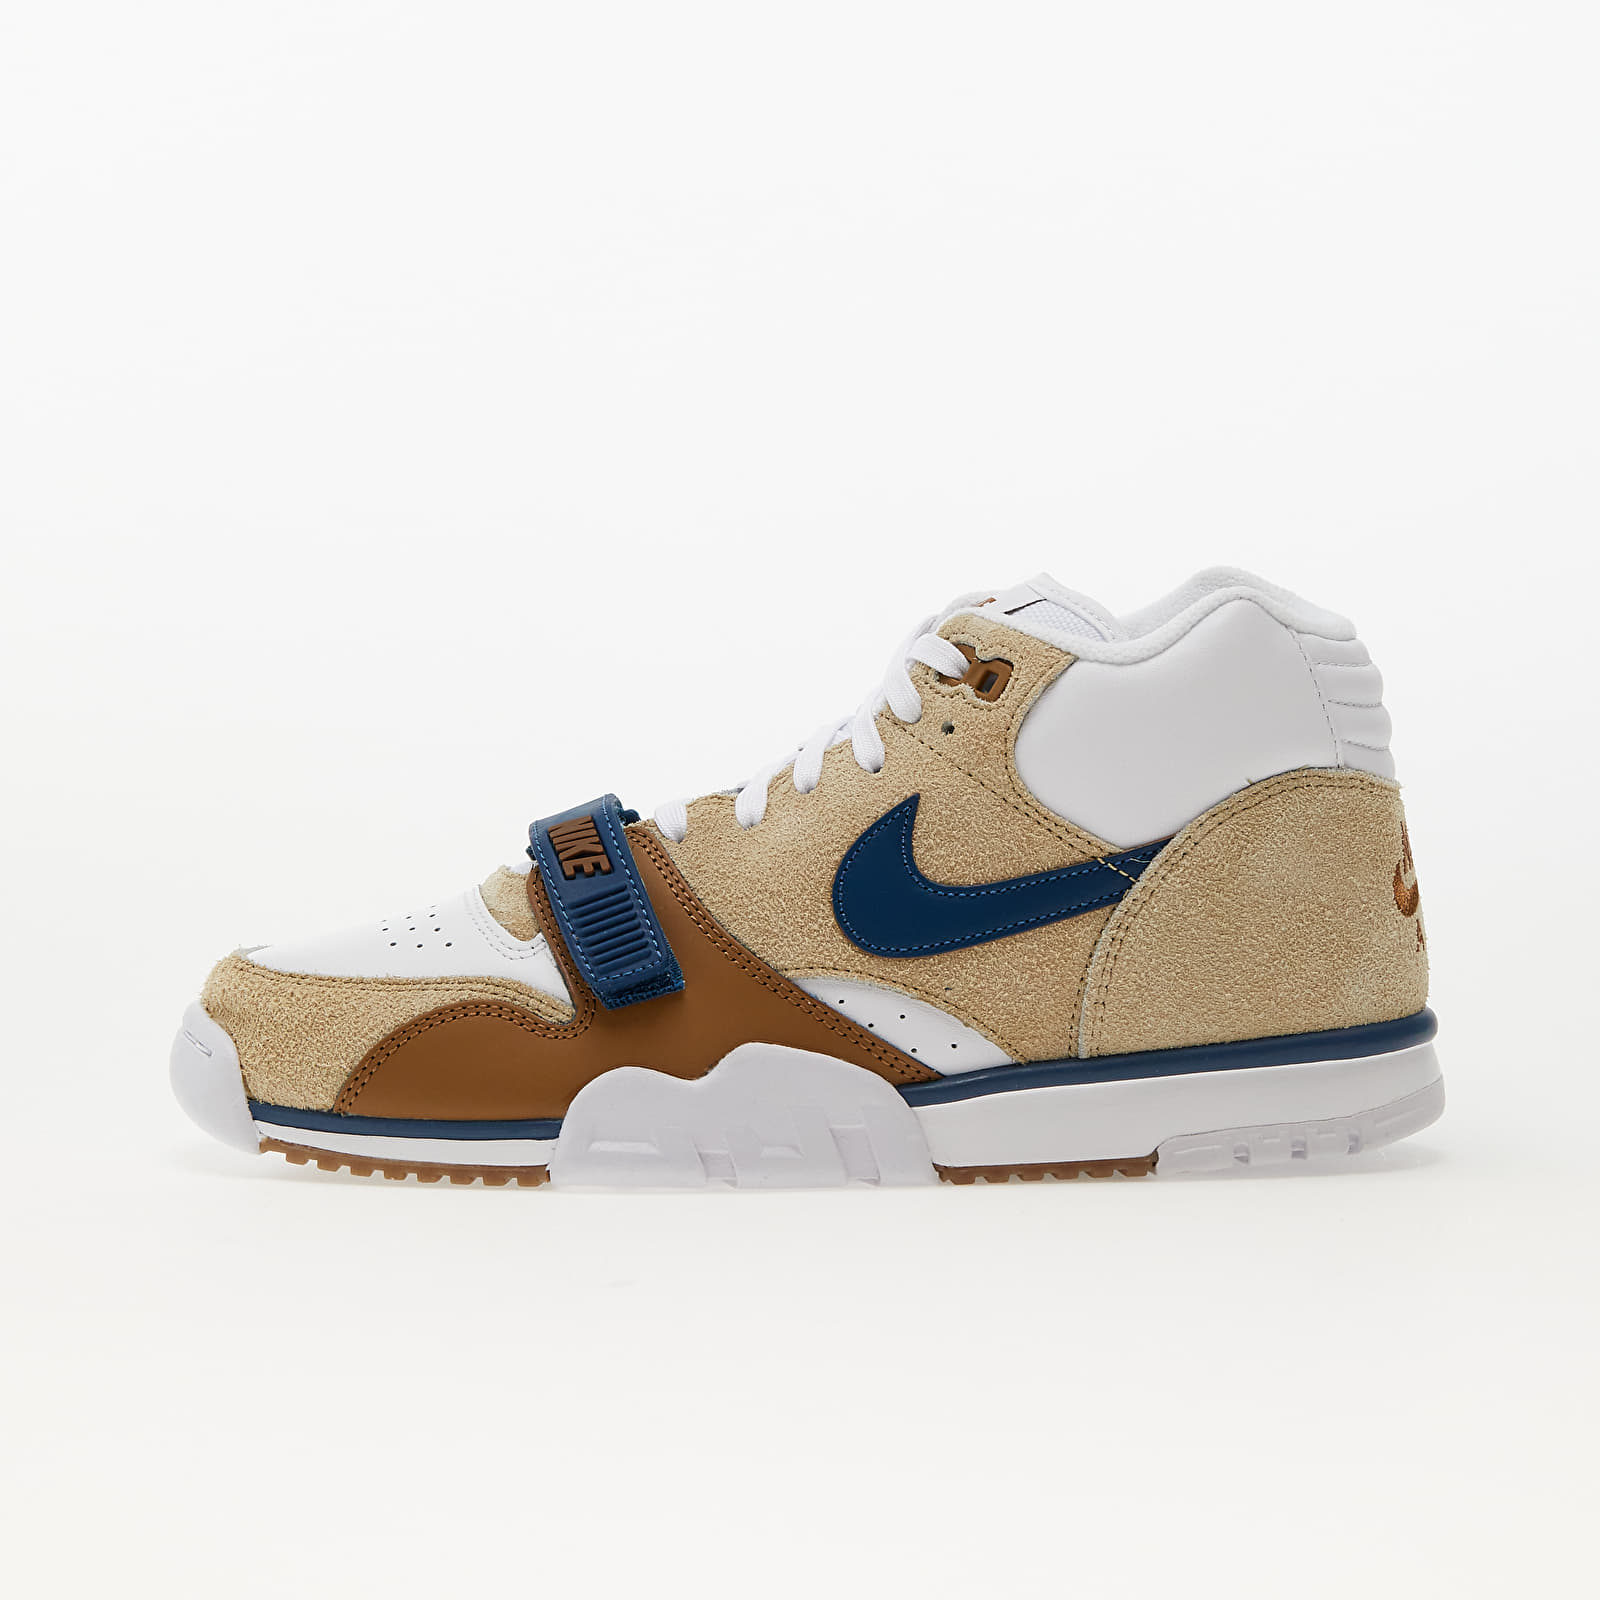 Chaussures et baskets homme Nike Air Trainer 1 Limestone/ Valerian Blue-Ale Brown-White